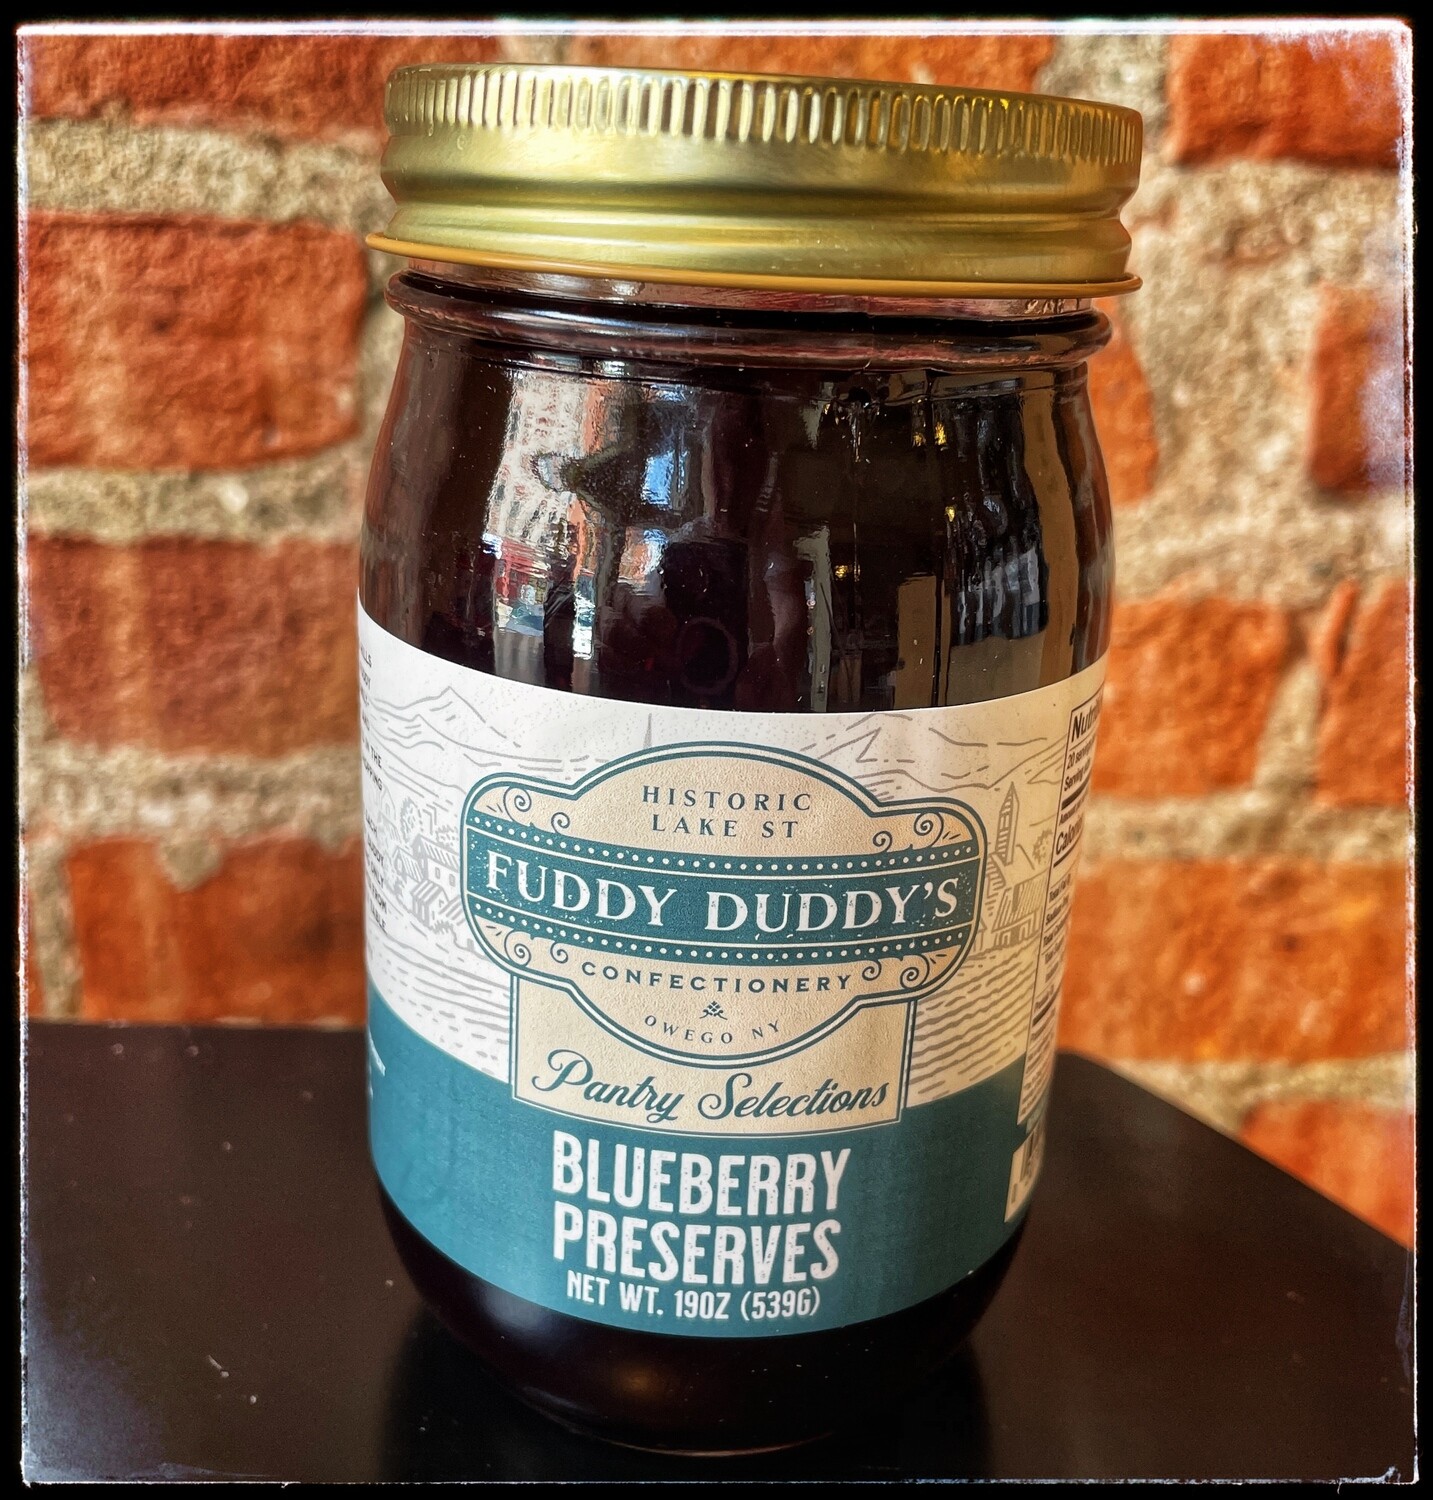 Fuddy Duddy's Blueberry Preserves